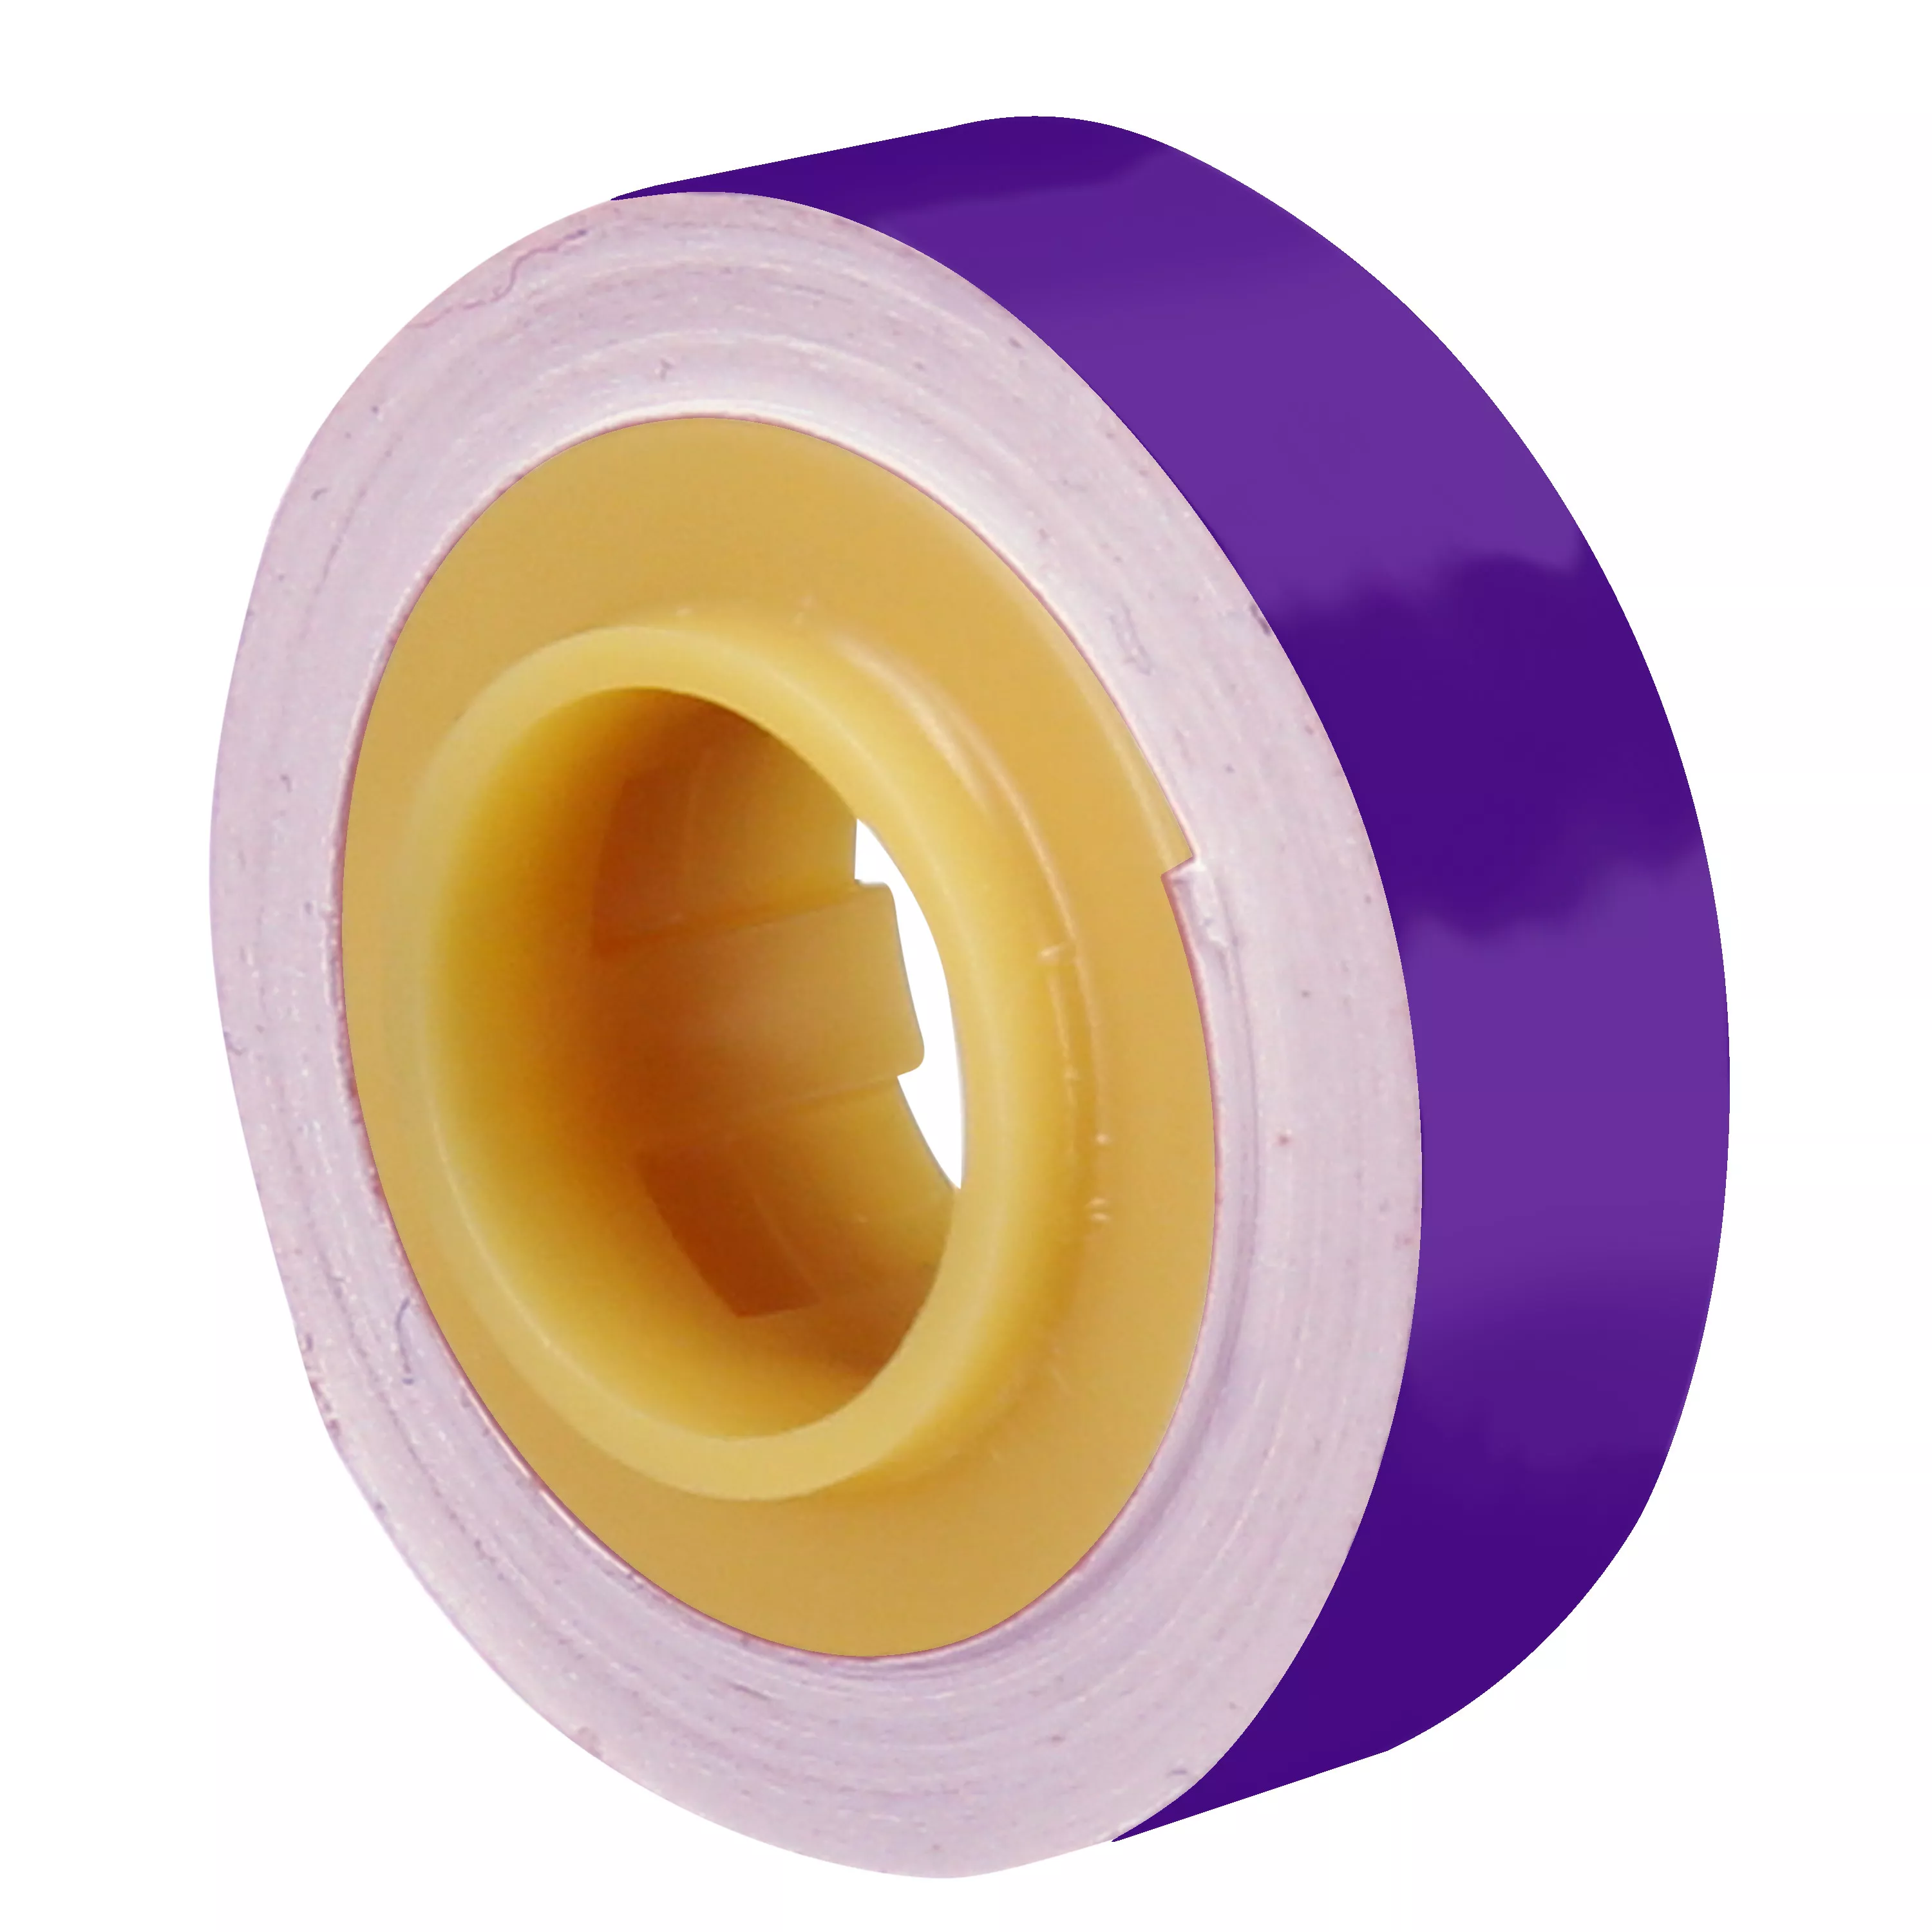 3M™ ScotchCode™ Wire Marker Tape Refill Roll SDR-VL, Violet, 50
Rolls/Case